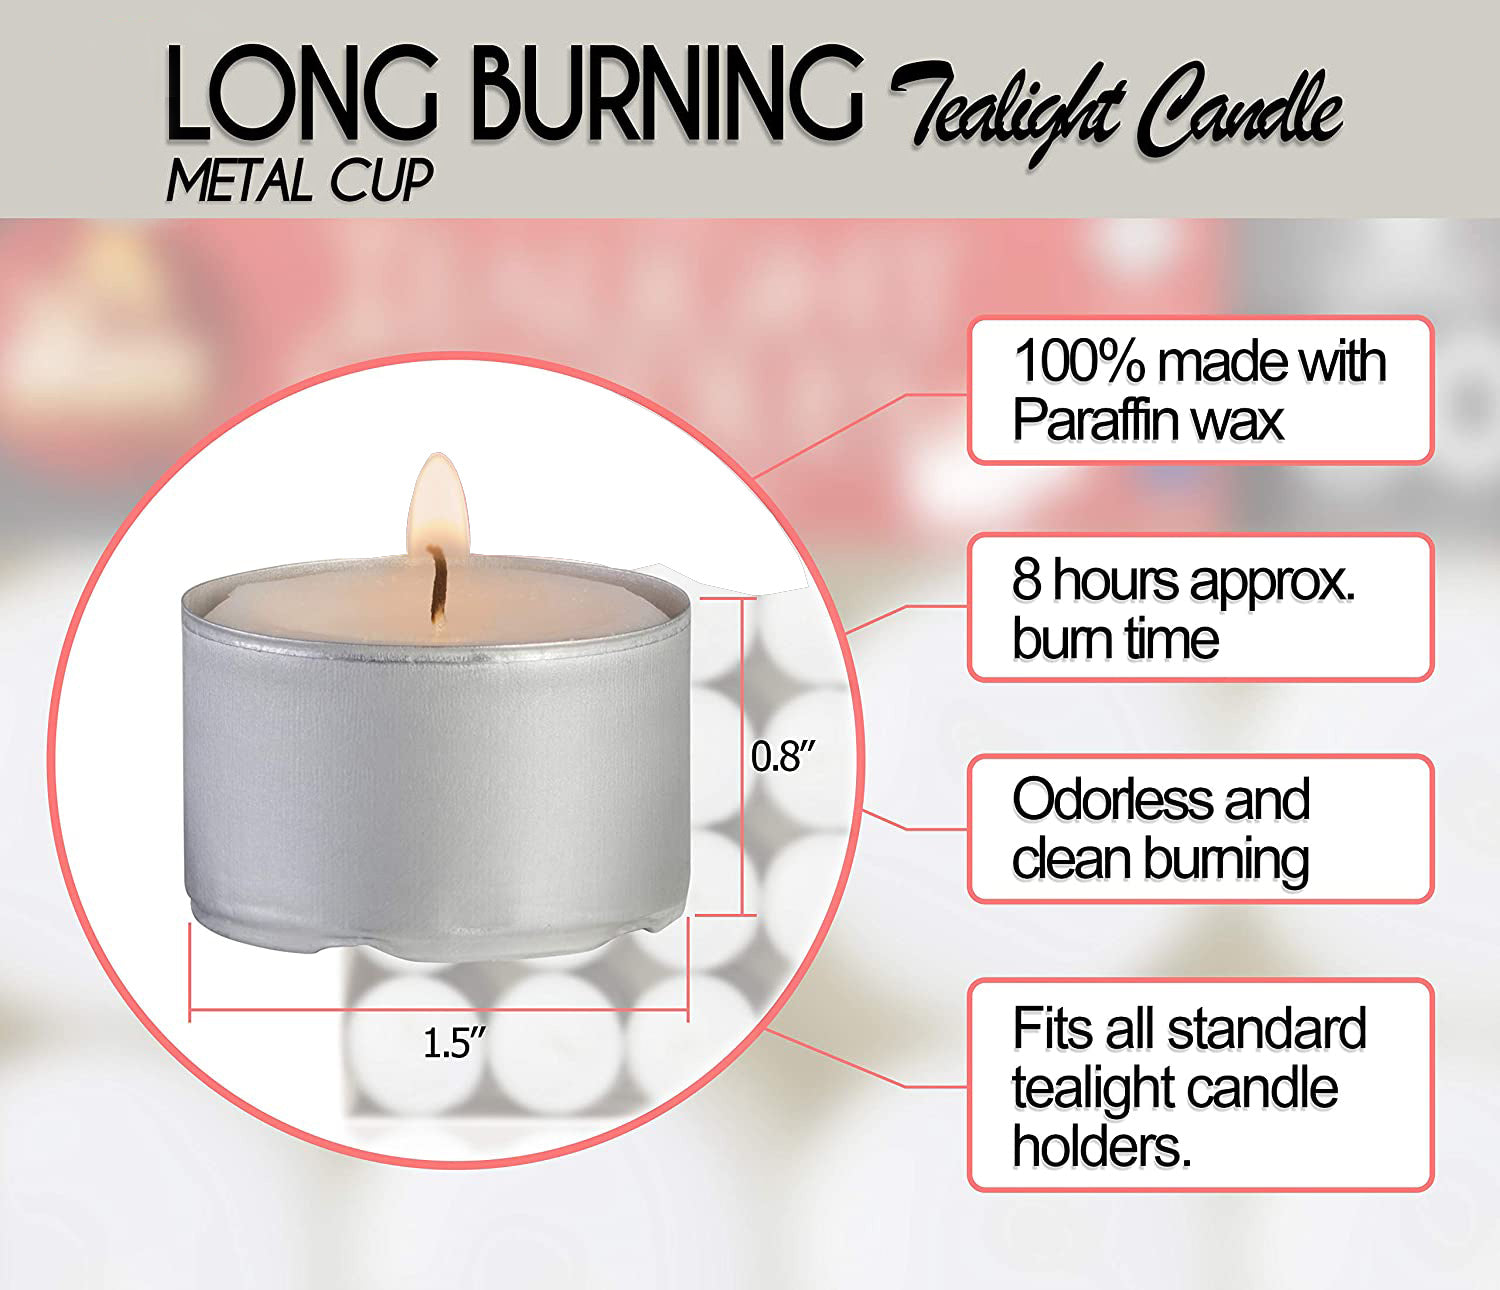 Unscented Tea Lights Candles for Diwali (Pack of 40) (8-9 Hour Burning)